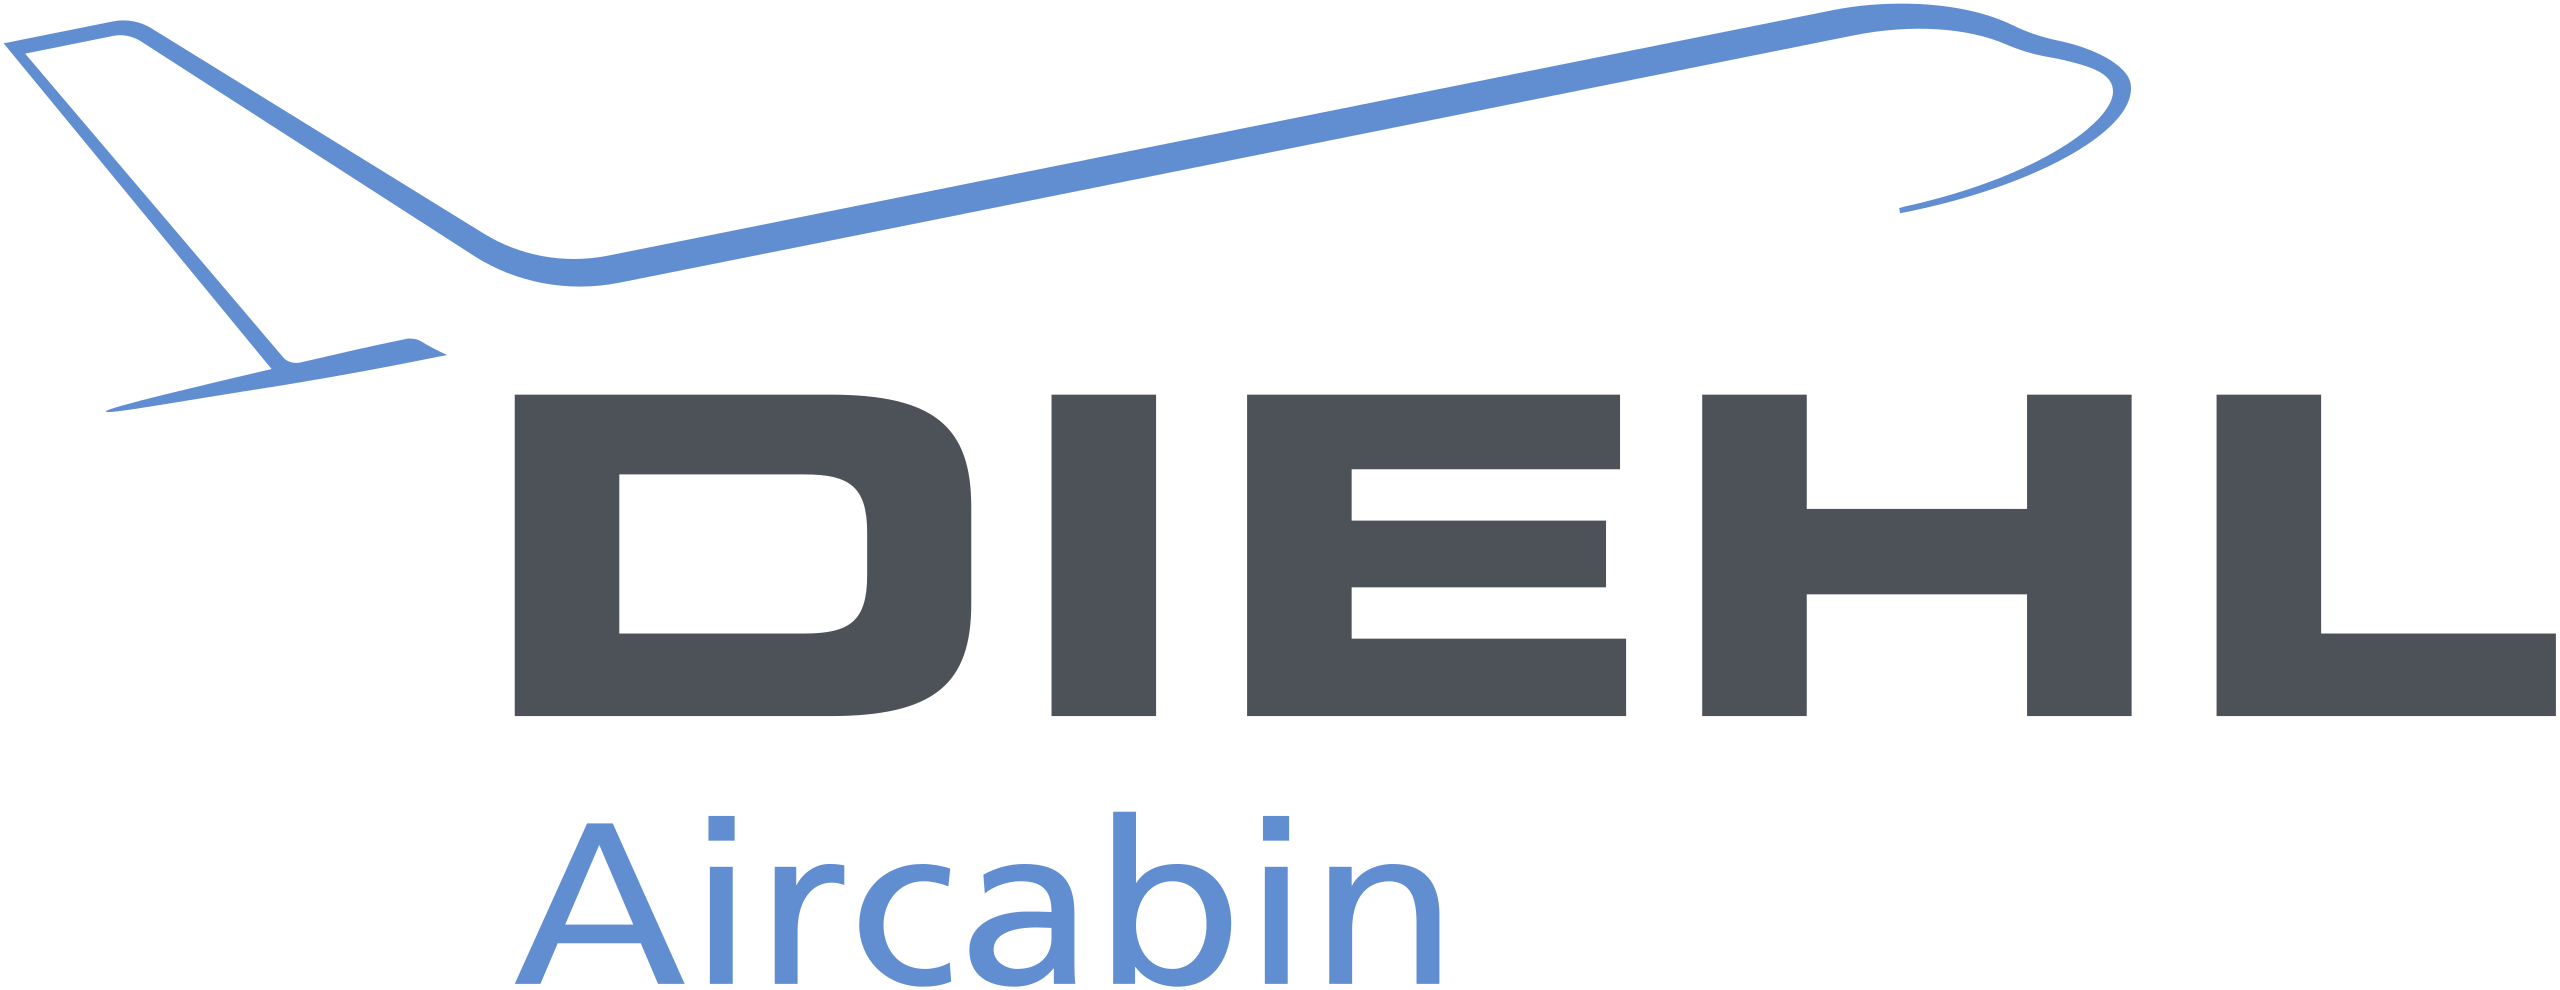 Diehl_Aircabin_Logo.svg.png